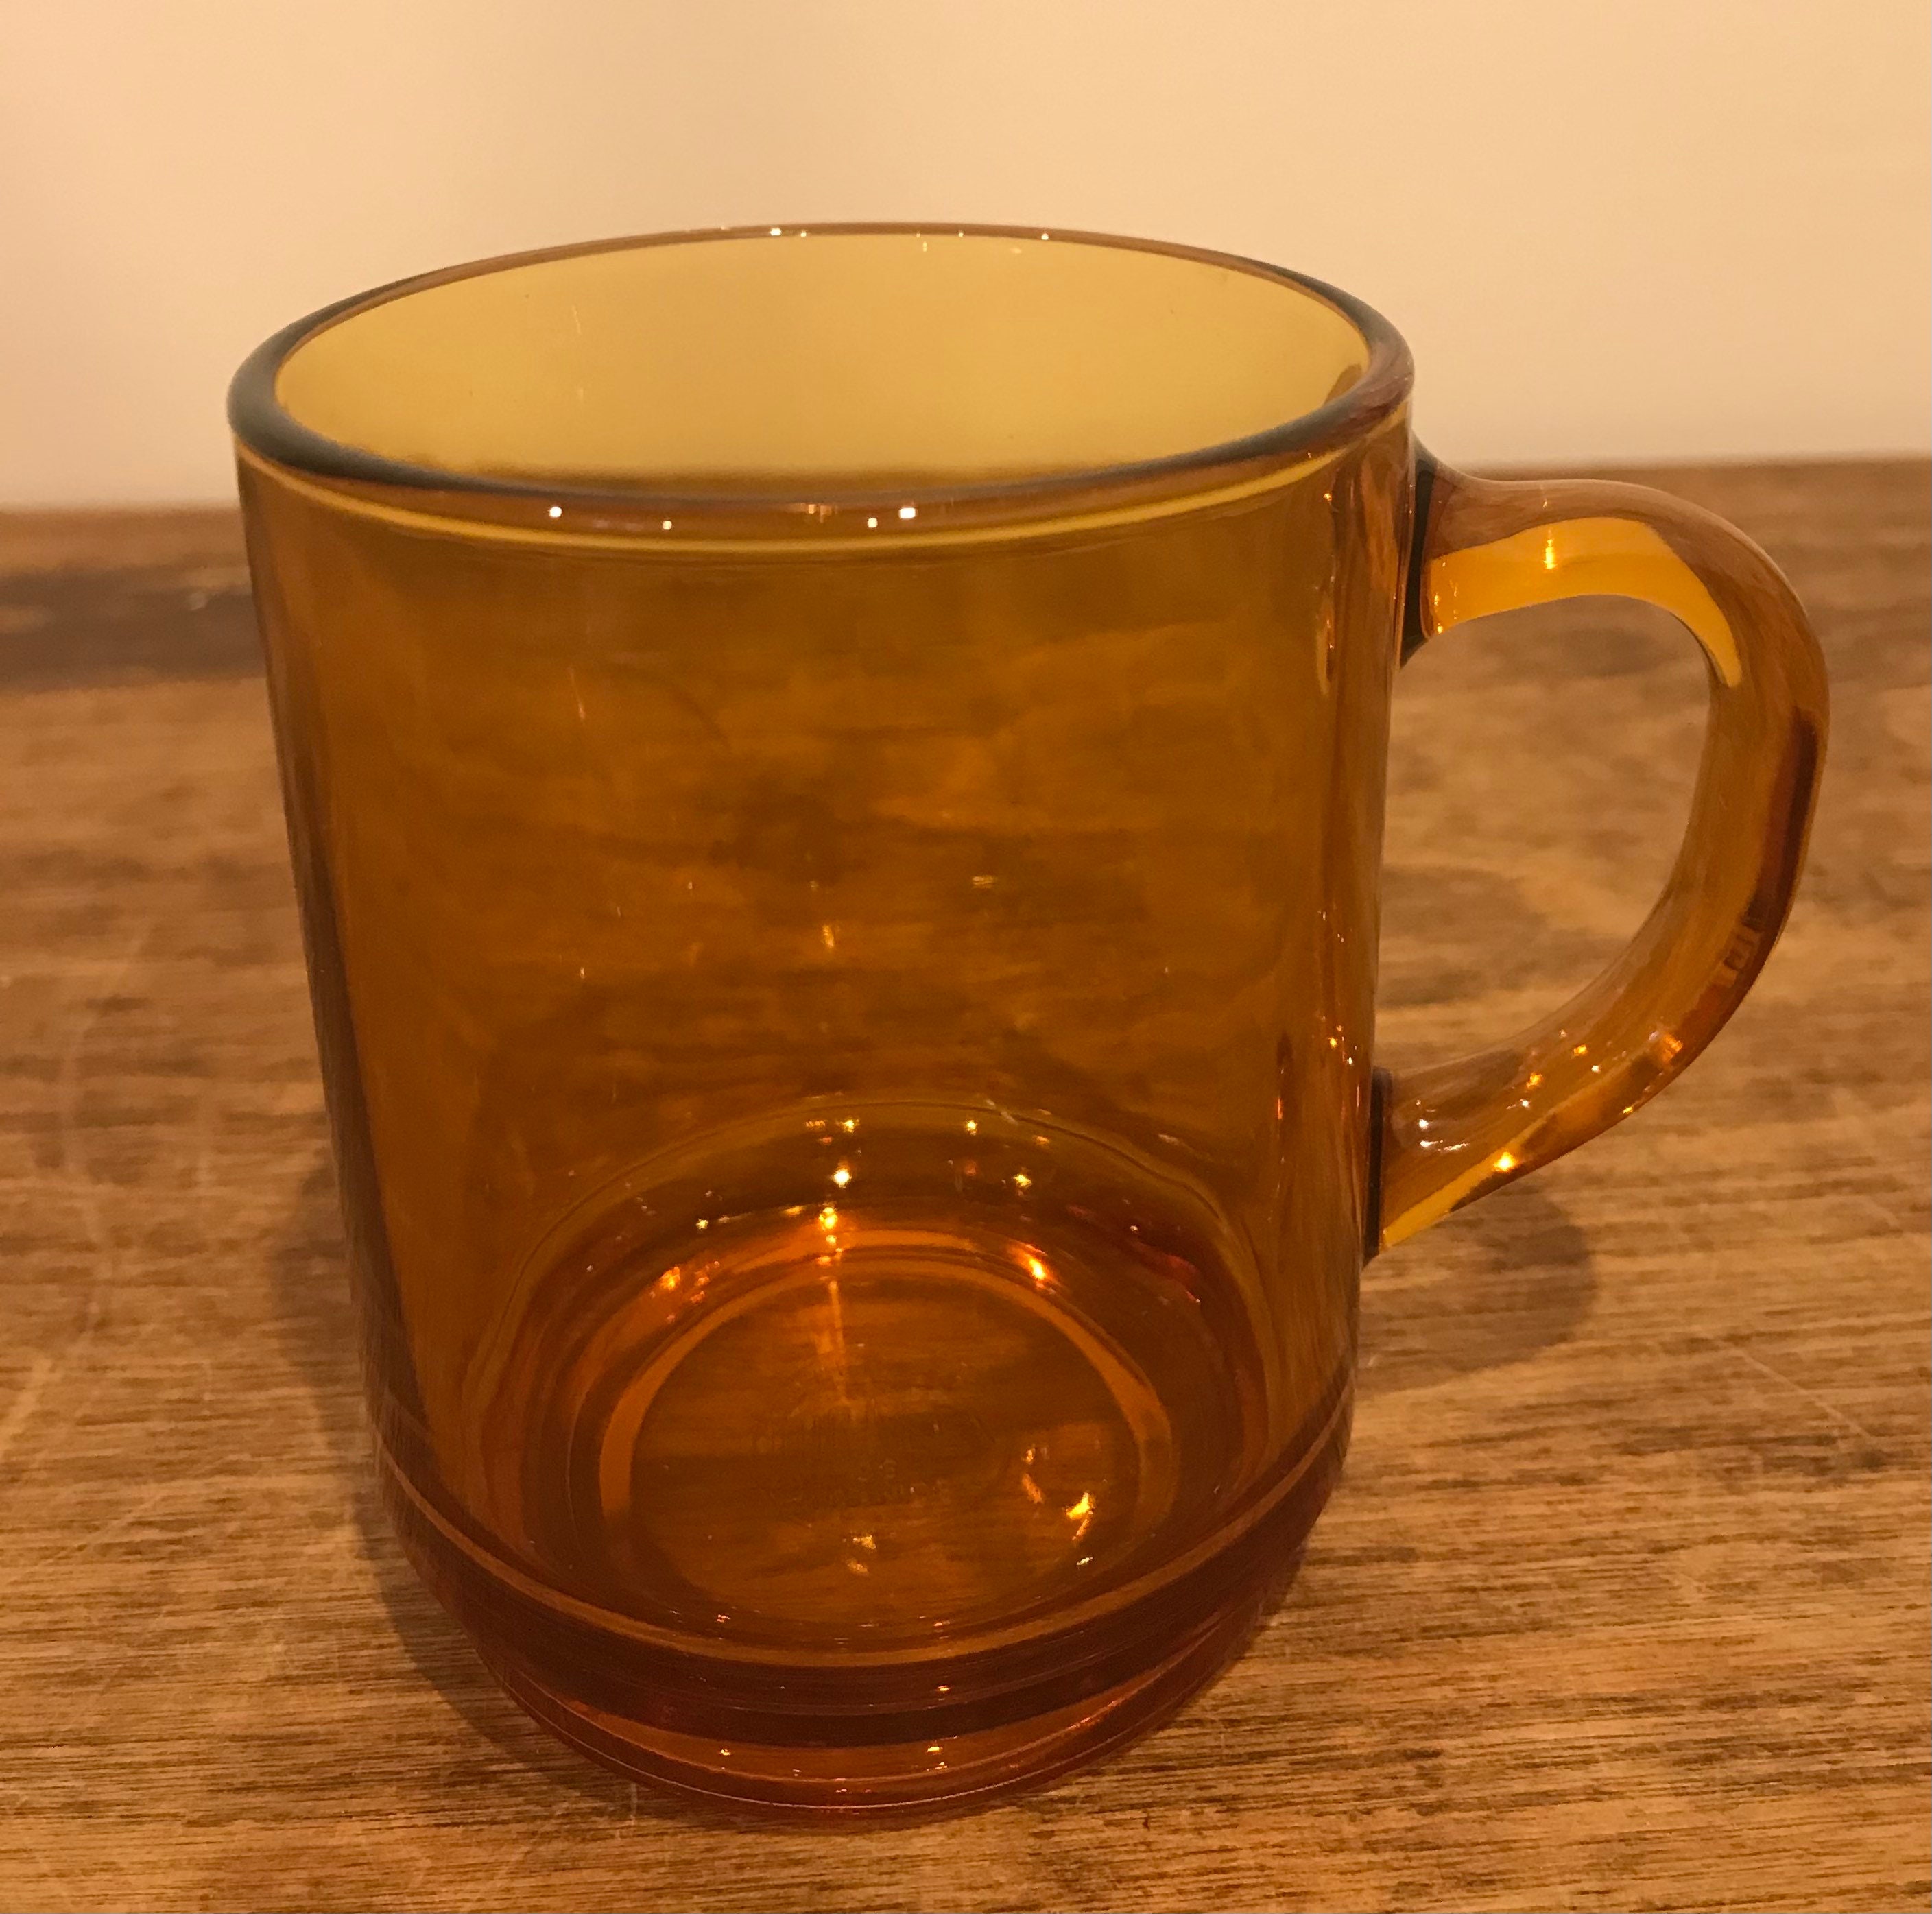 This Amber Glass Coffee Mug Has a Cool Mid-Century Design